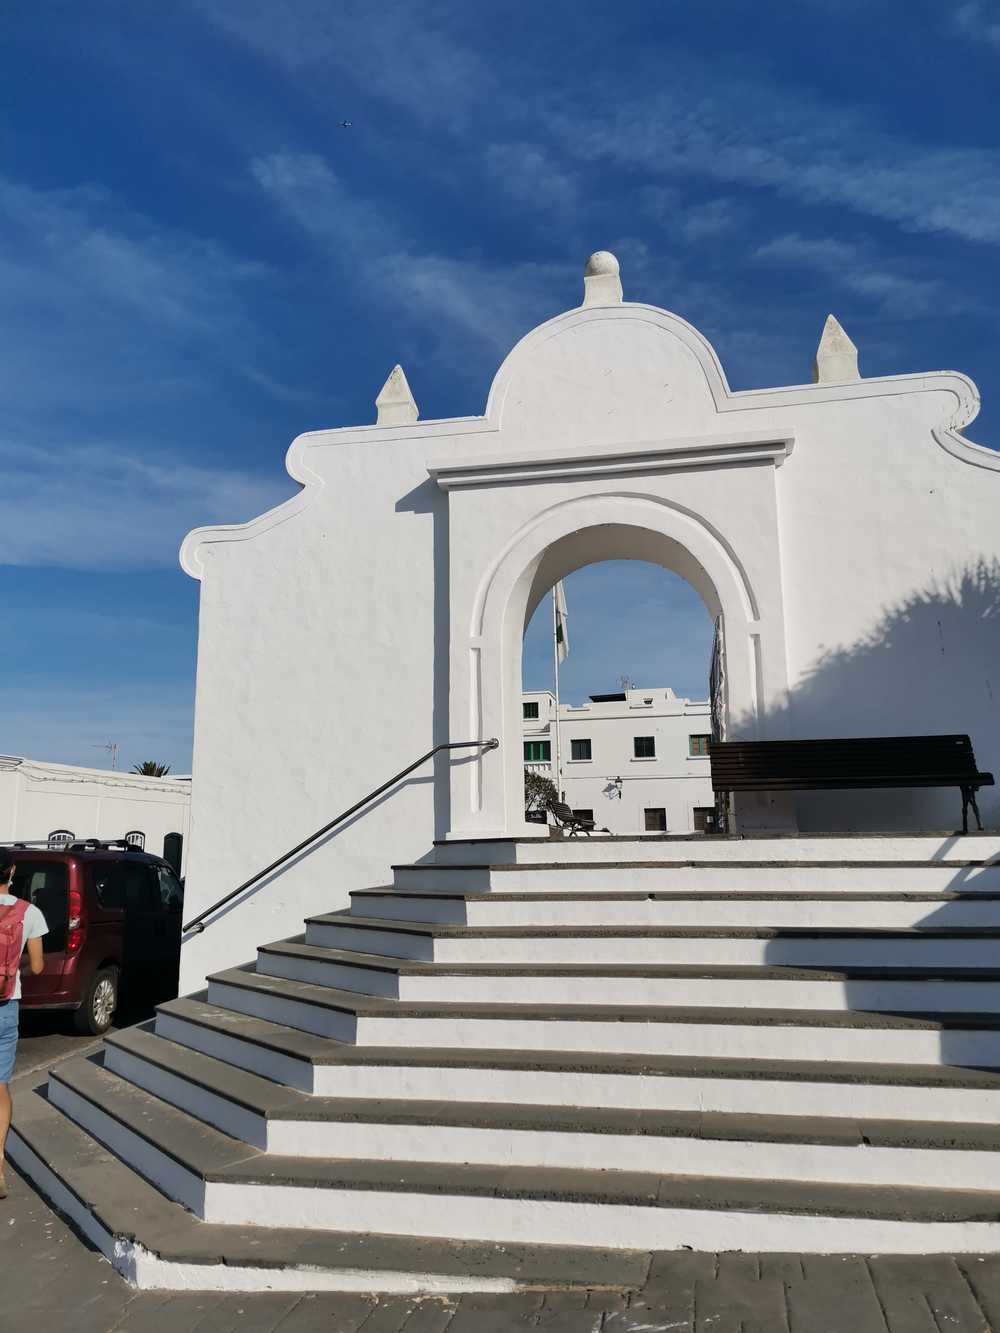 Porte Teguise Lanzarote